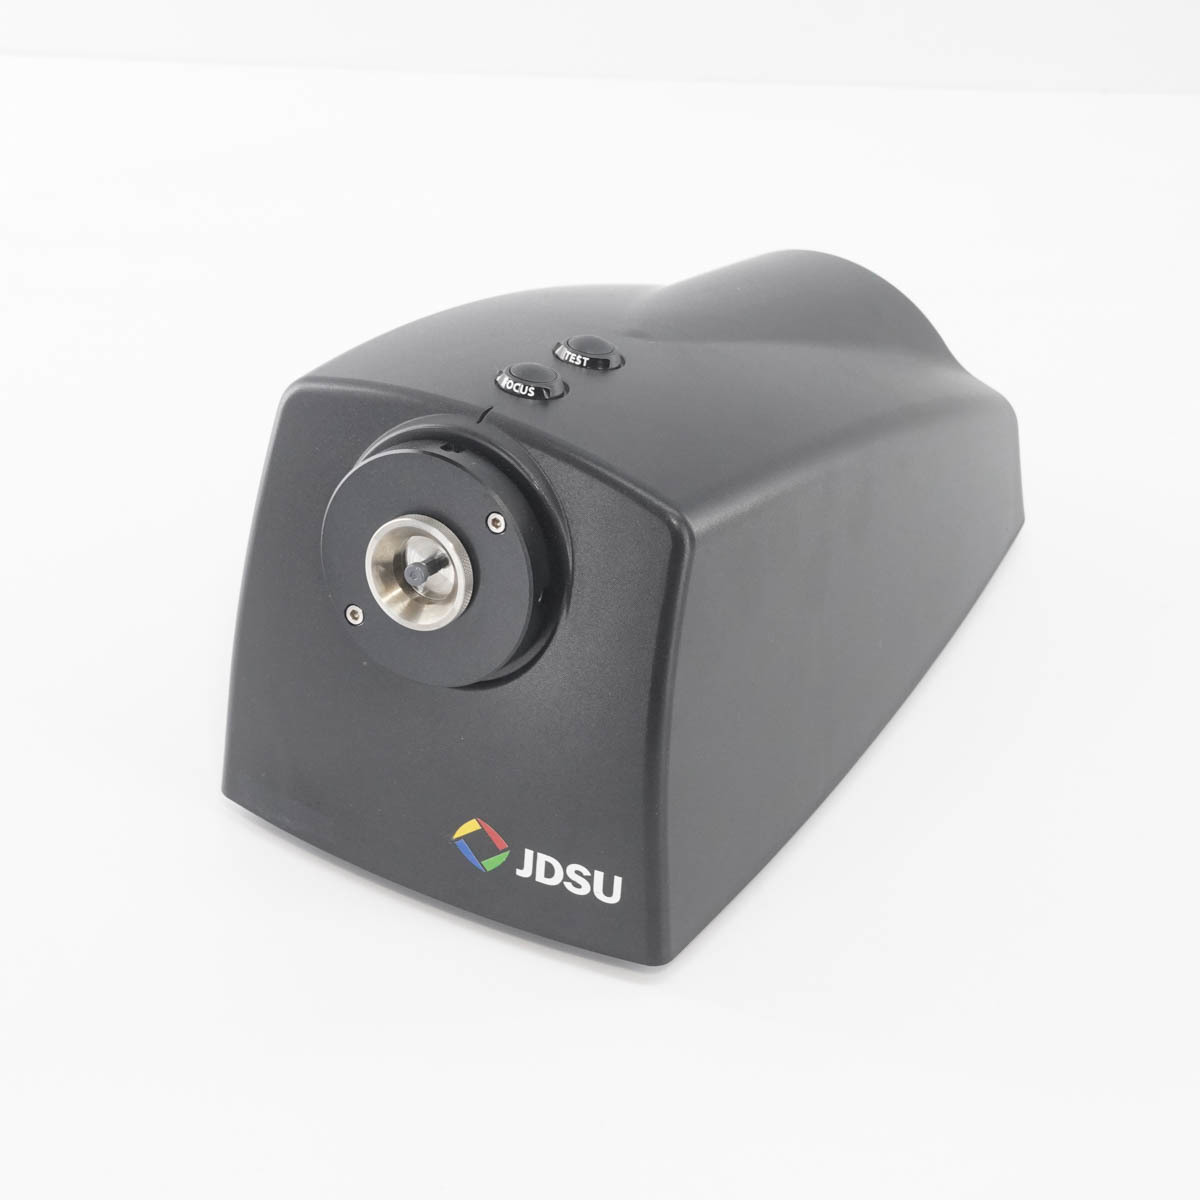 [DW] 8日保証 FVA-2400 JDSU USB2 Digital Fiber Microscope ファイバーマイクロスコープ 光コネクタ端面検査装置[05416-0036]の画像2